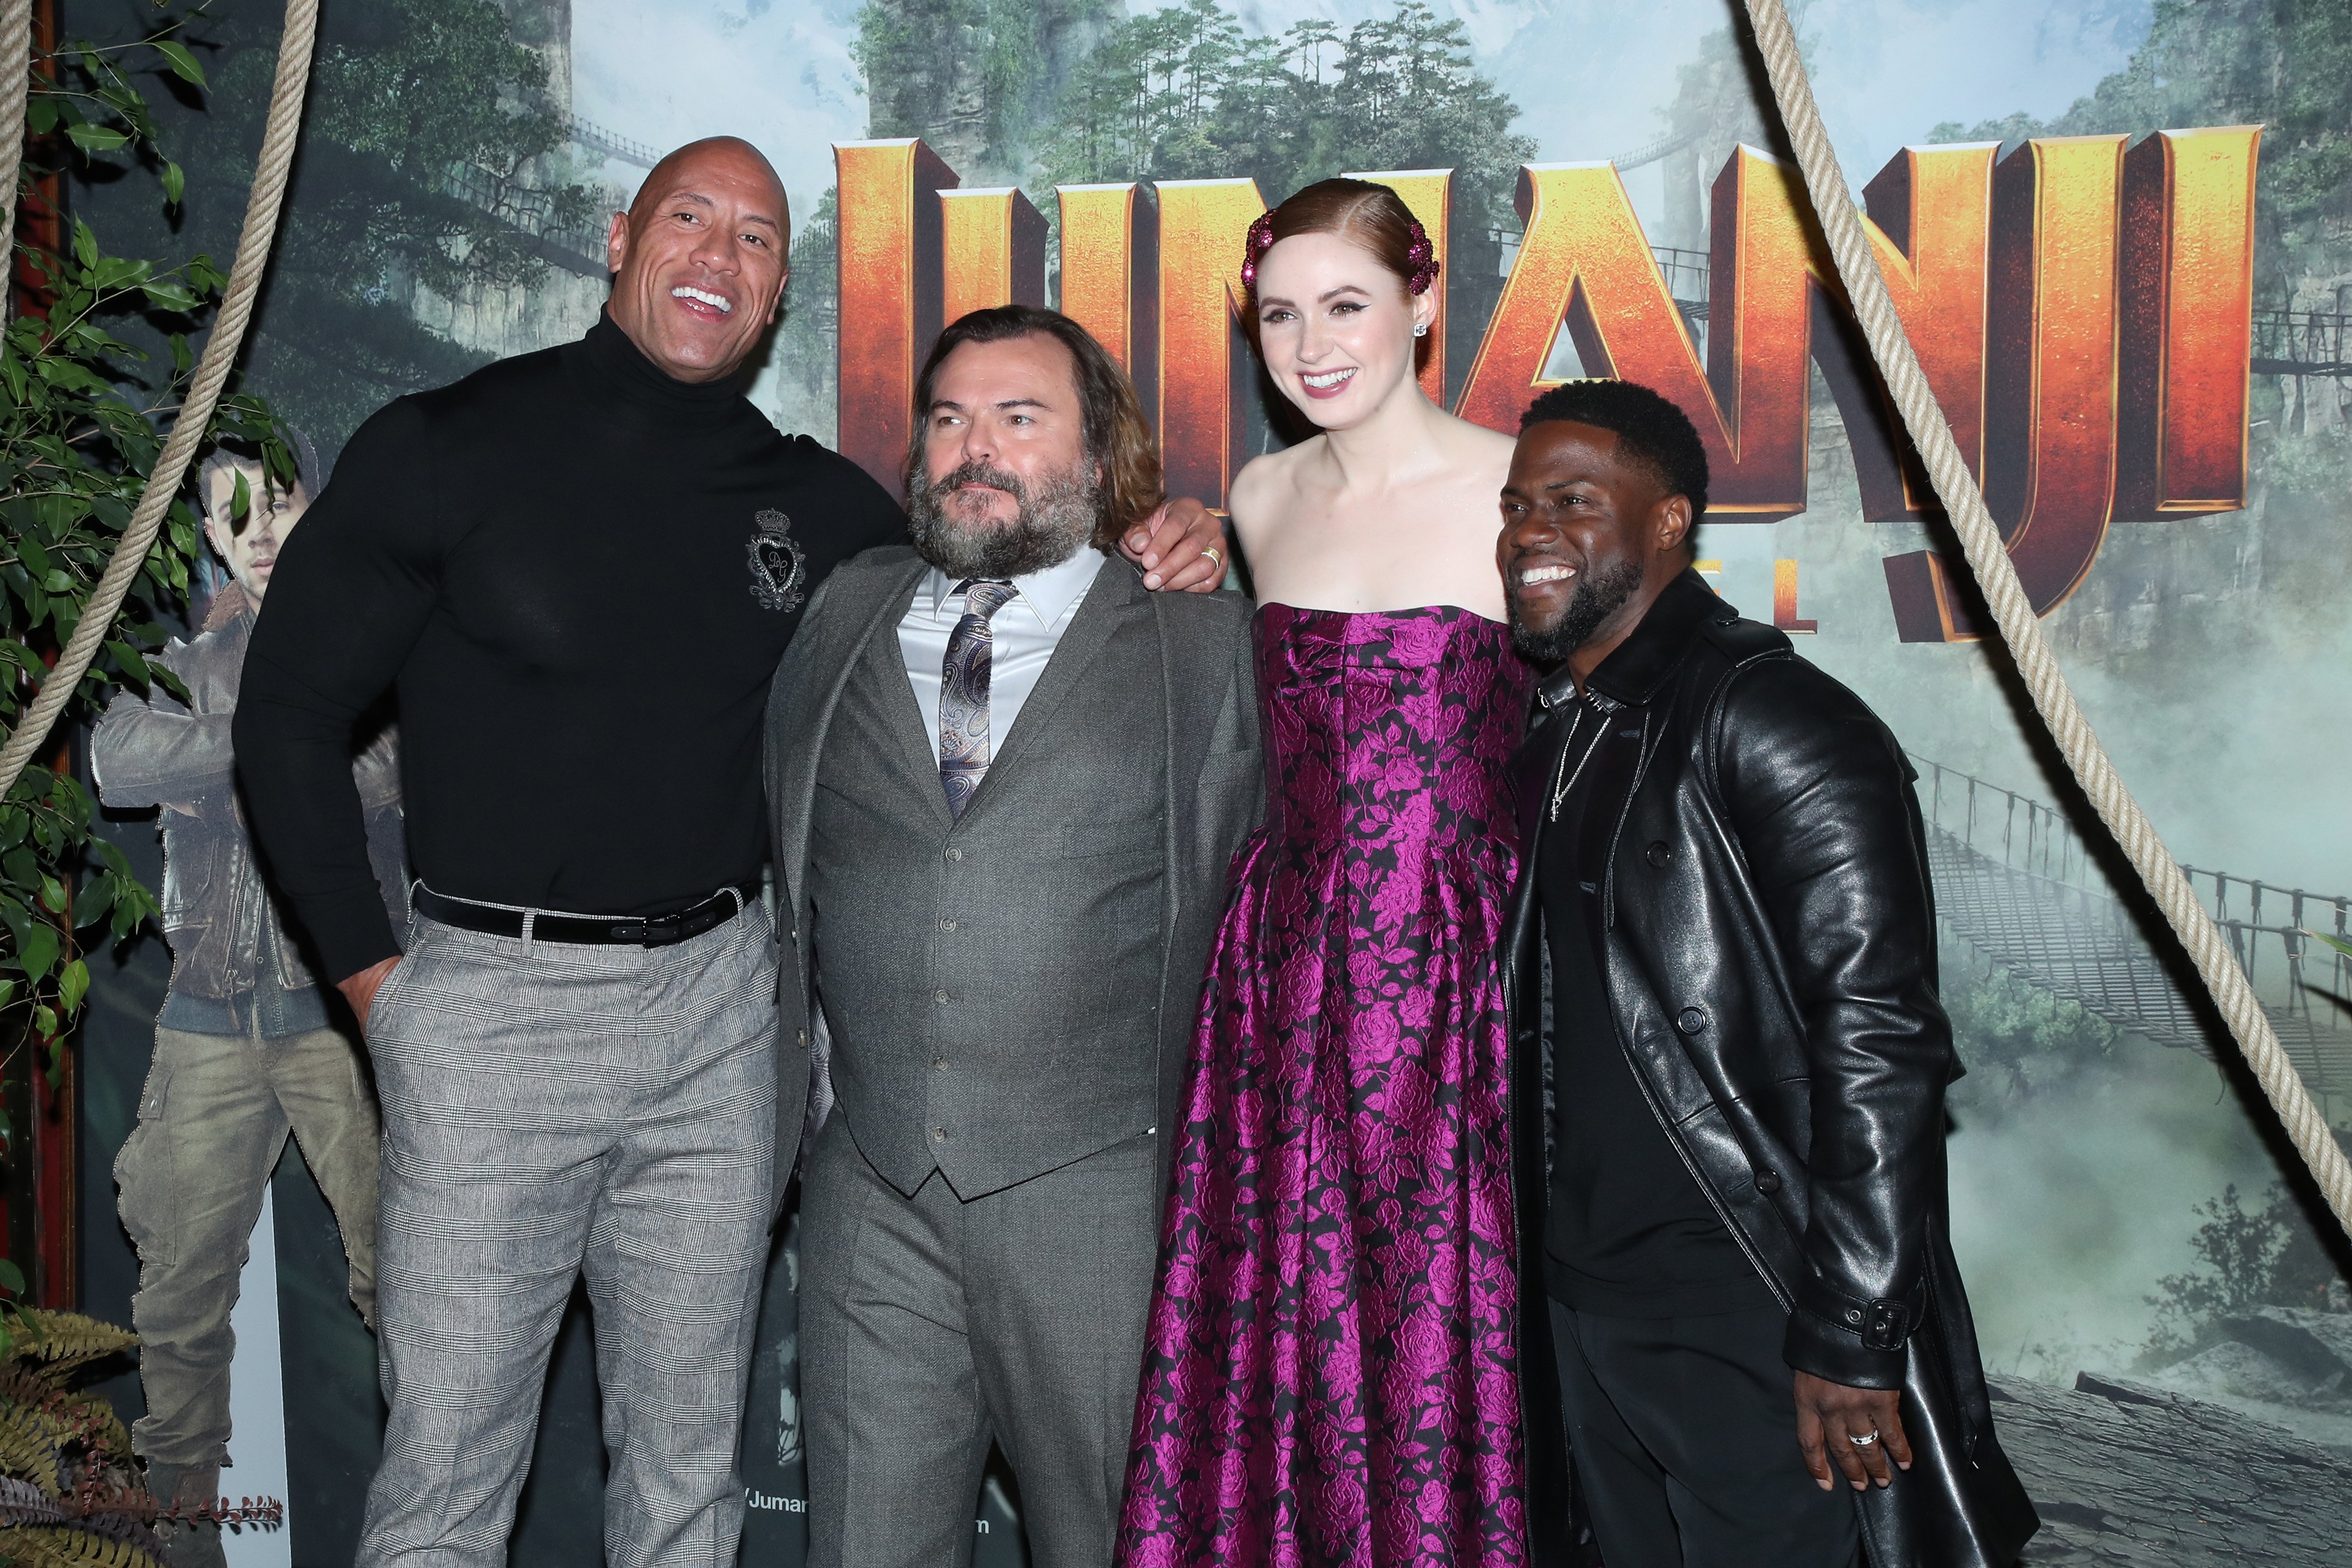 Dwayne 'The Rock' Johnson, Jack Black, Karen Gillan, and Kevin Hart pose on the red carpet at the Jumanji premiere.